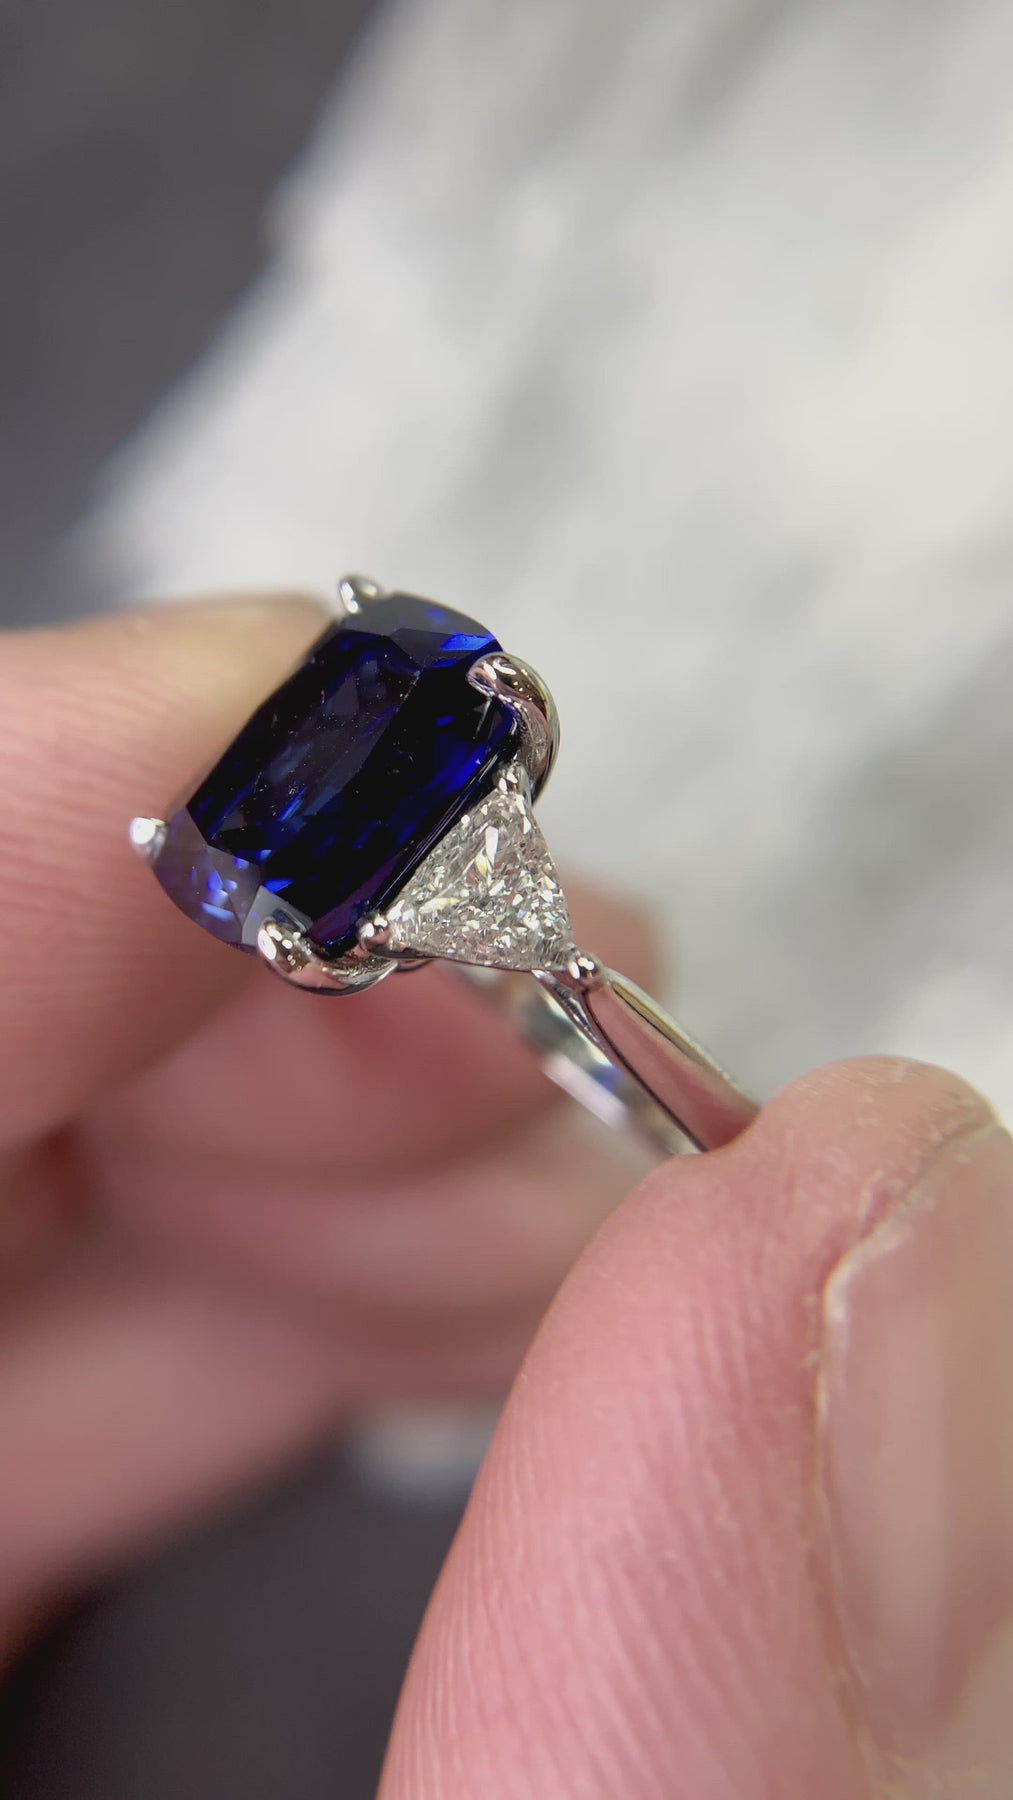 4.29 Carat Electric Blue Sapphire and Diamond Ring